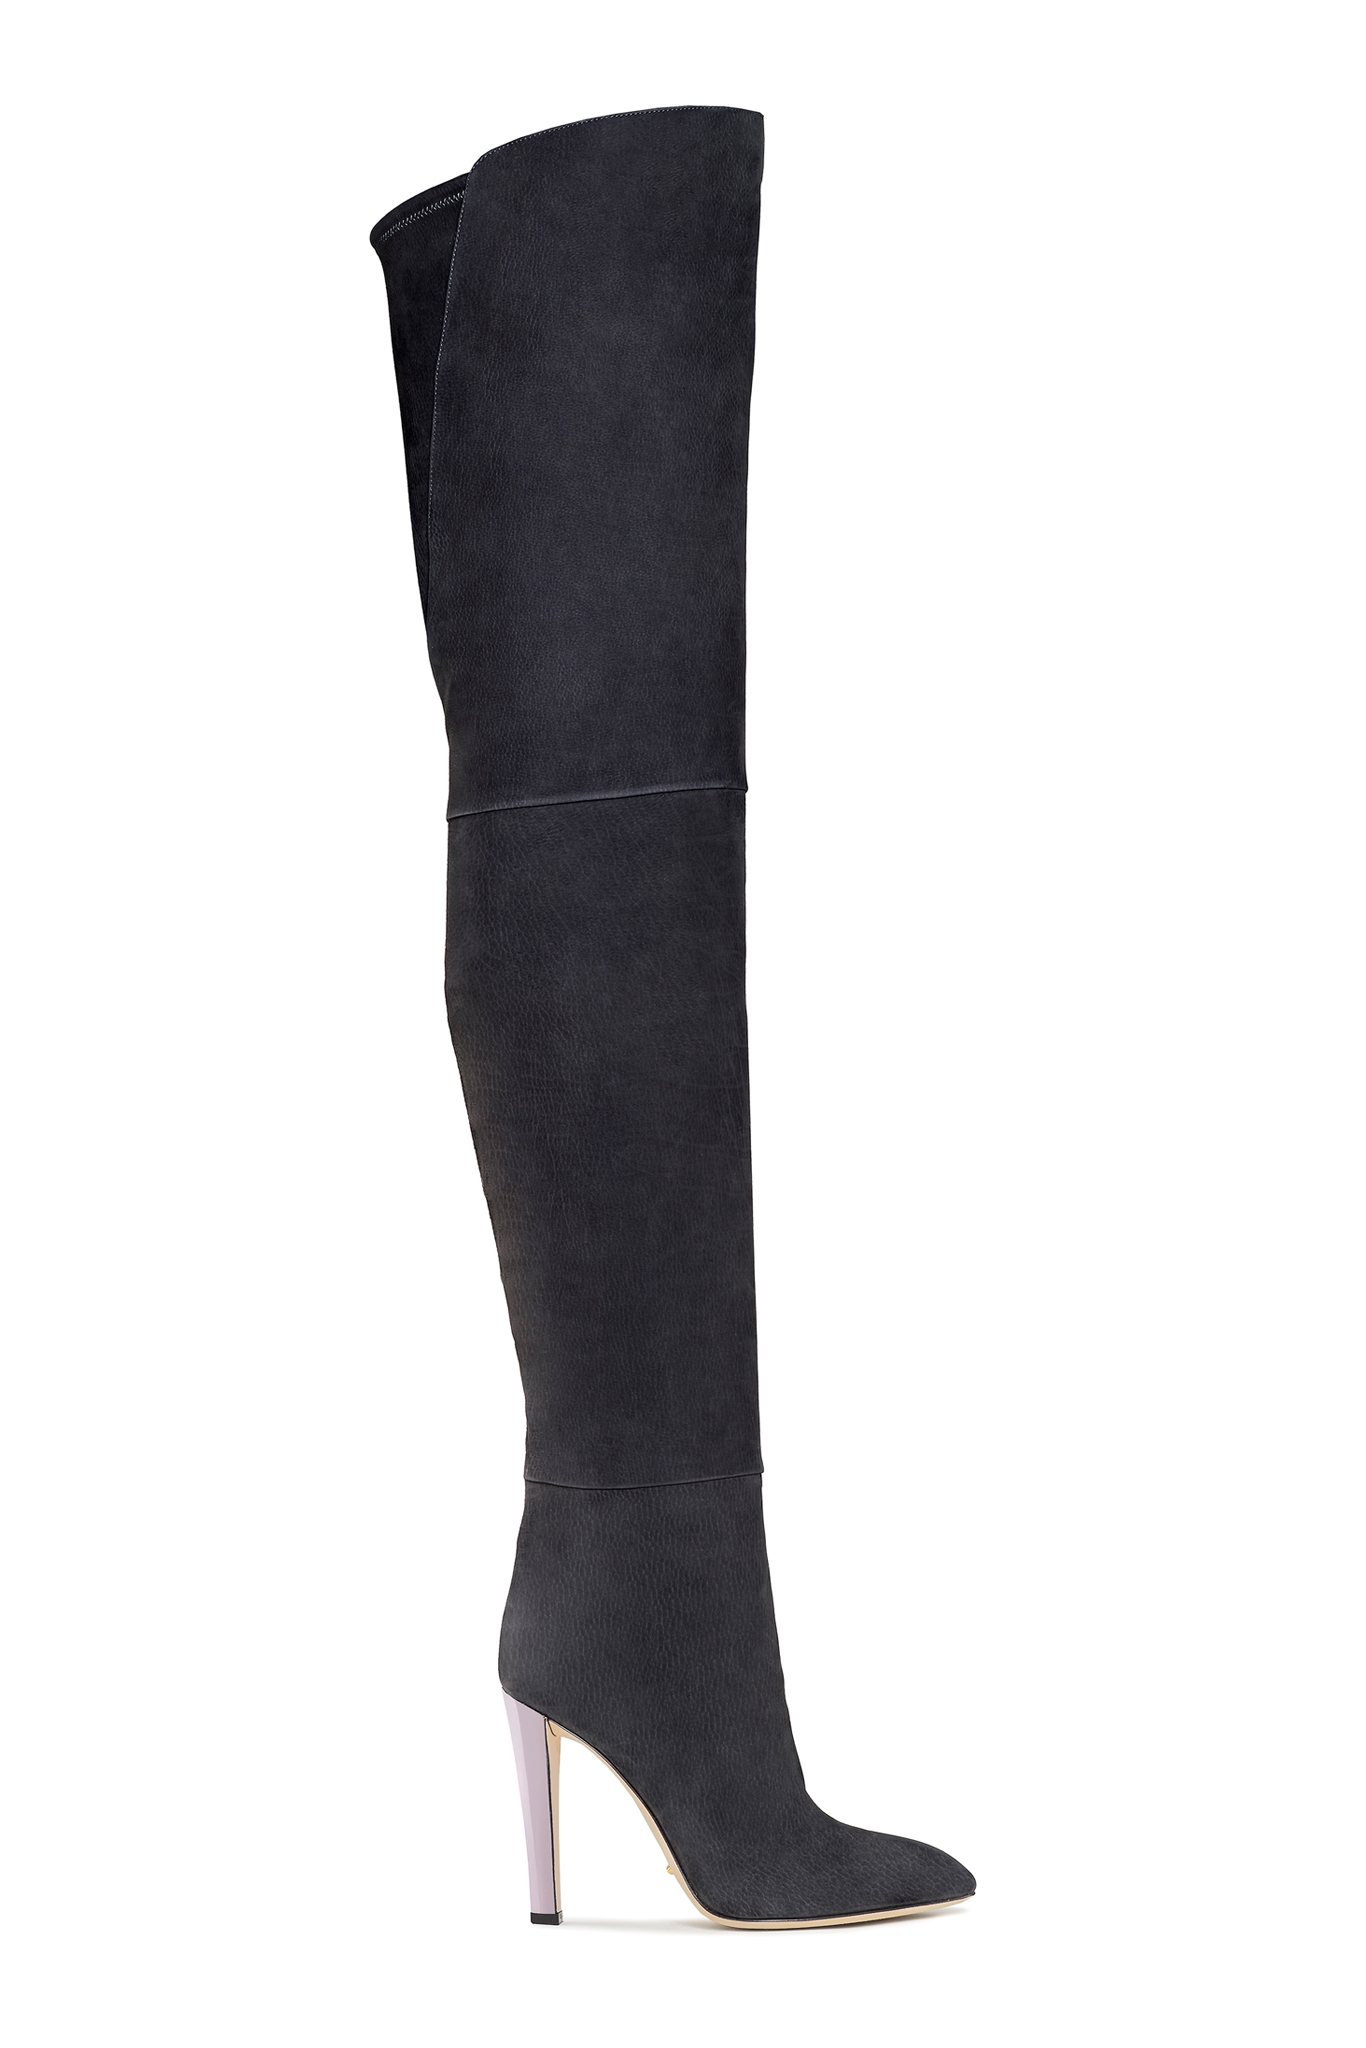 06-08-accessories-trends-fall-2015-thigh-high-boots.JPG